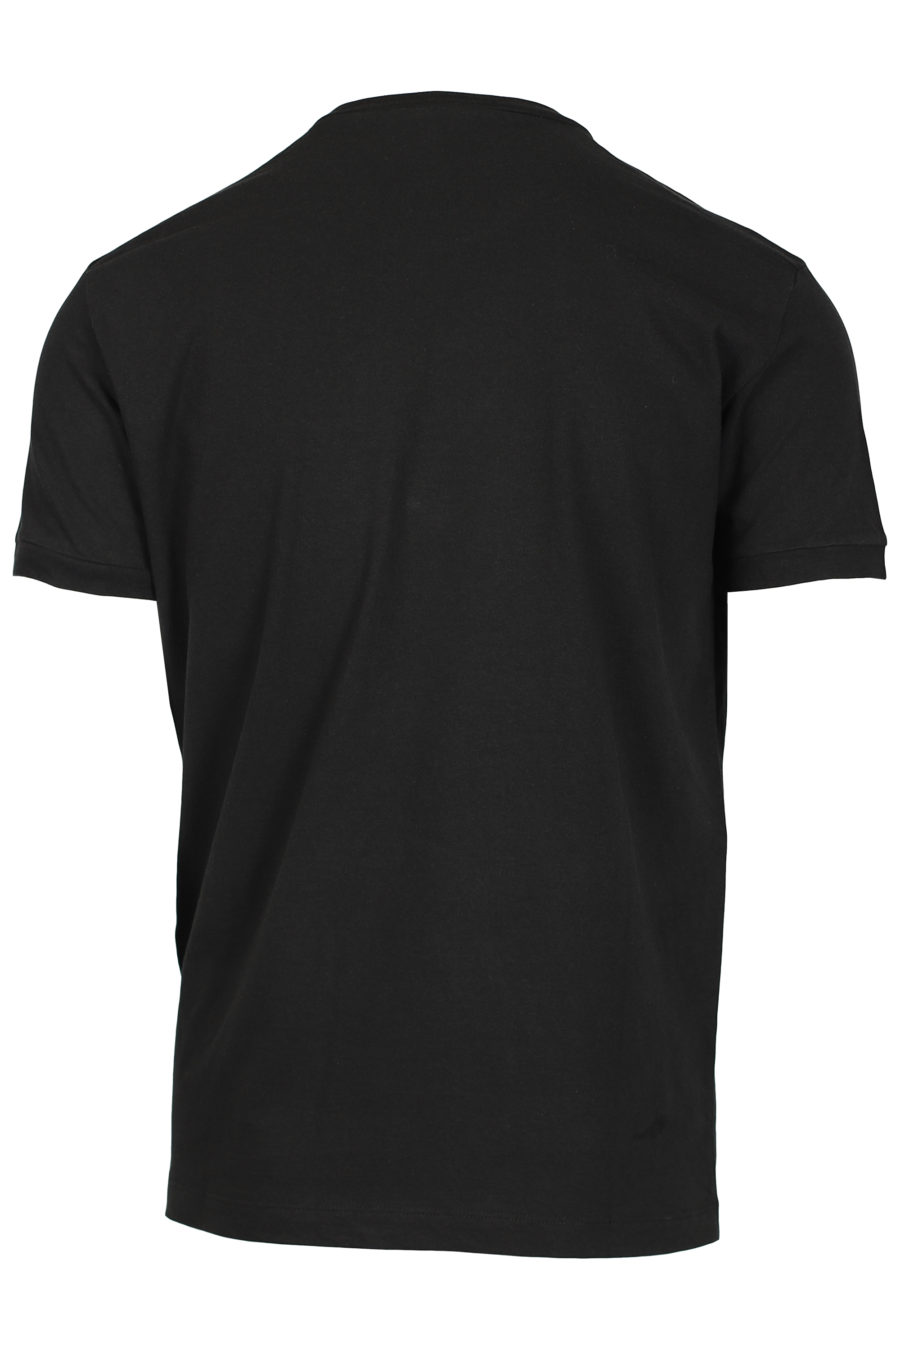 T-shirt noir à petits motifs - IMG 2555